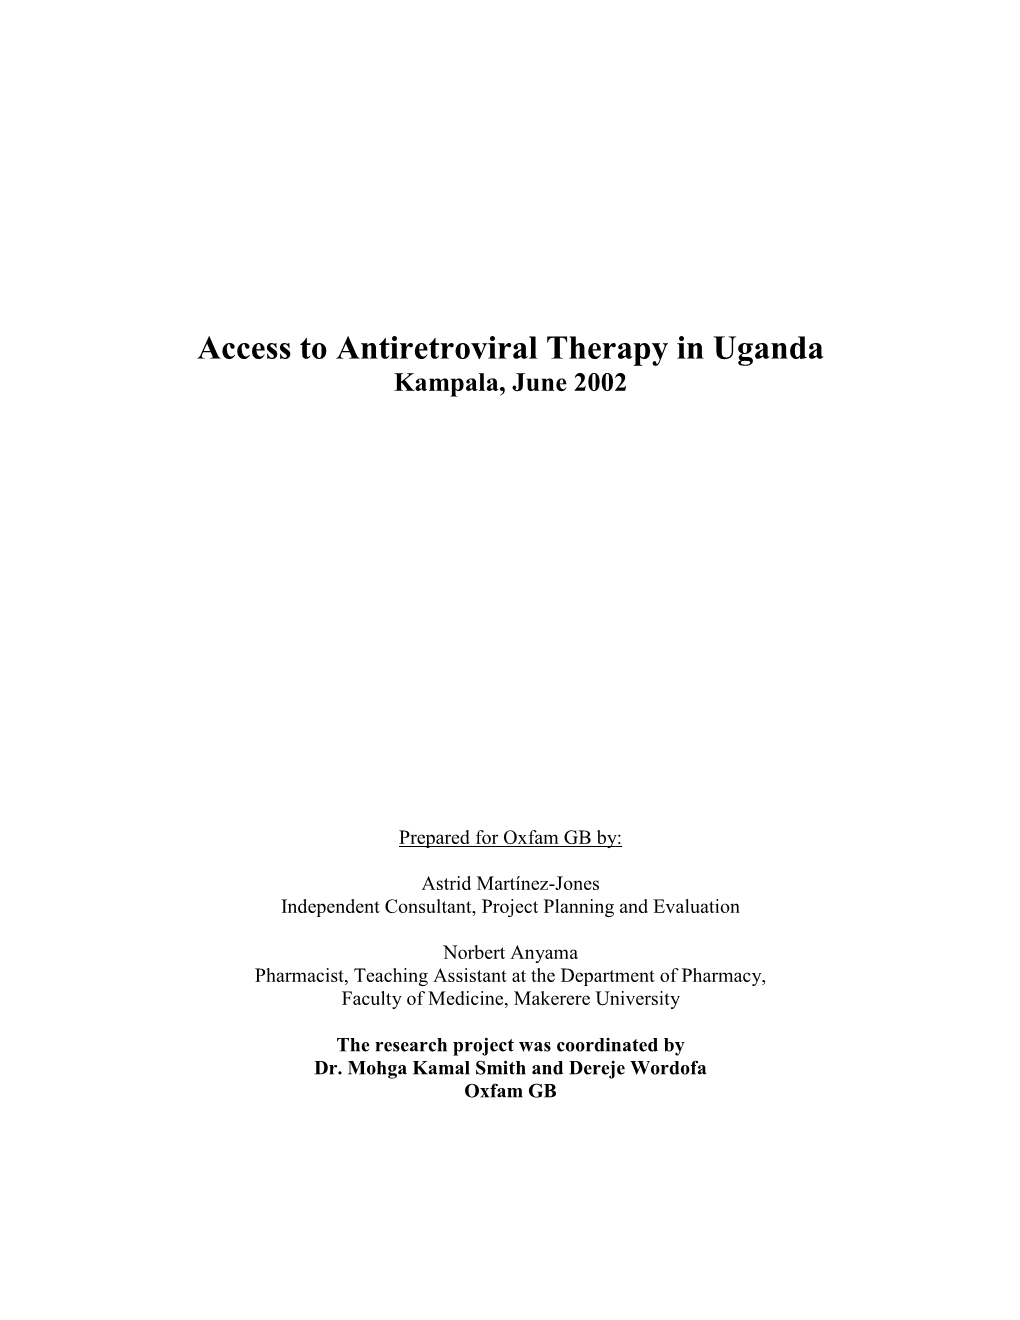 Access to Antiretroviral Therapy in Uganda Kampala, June 2002